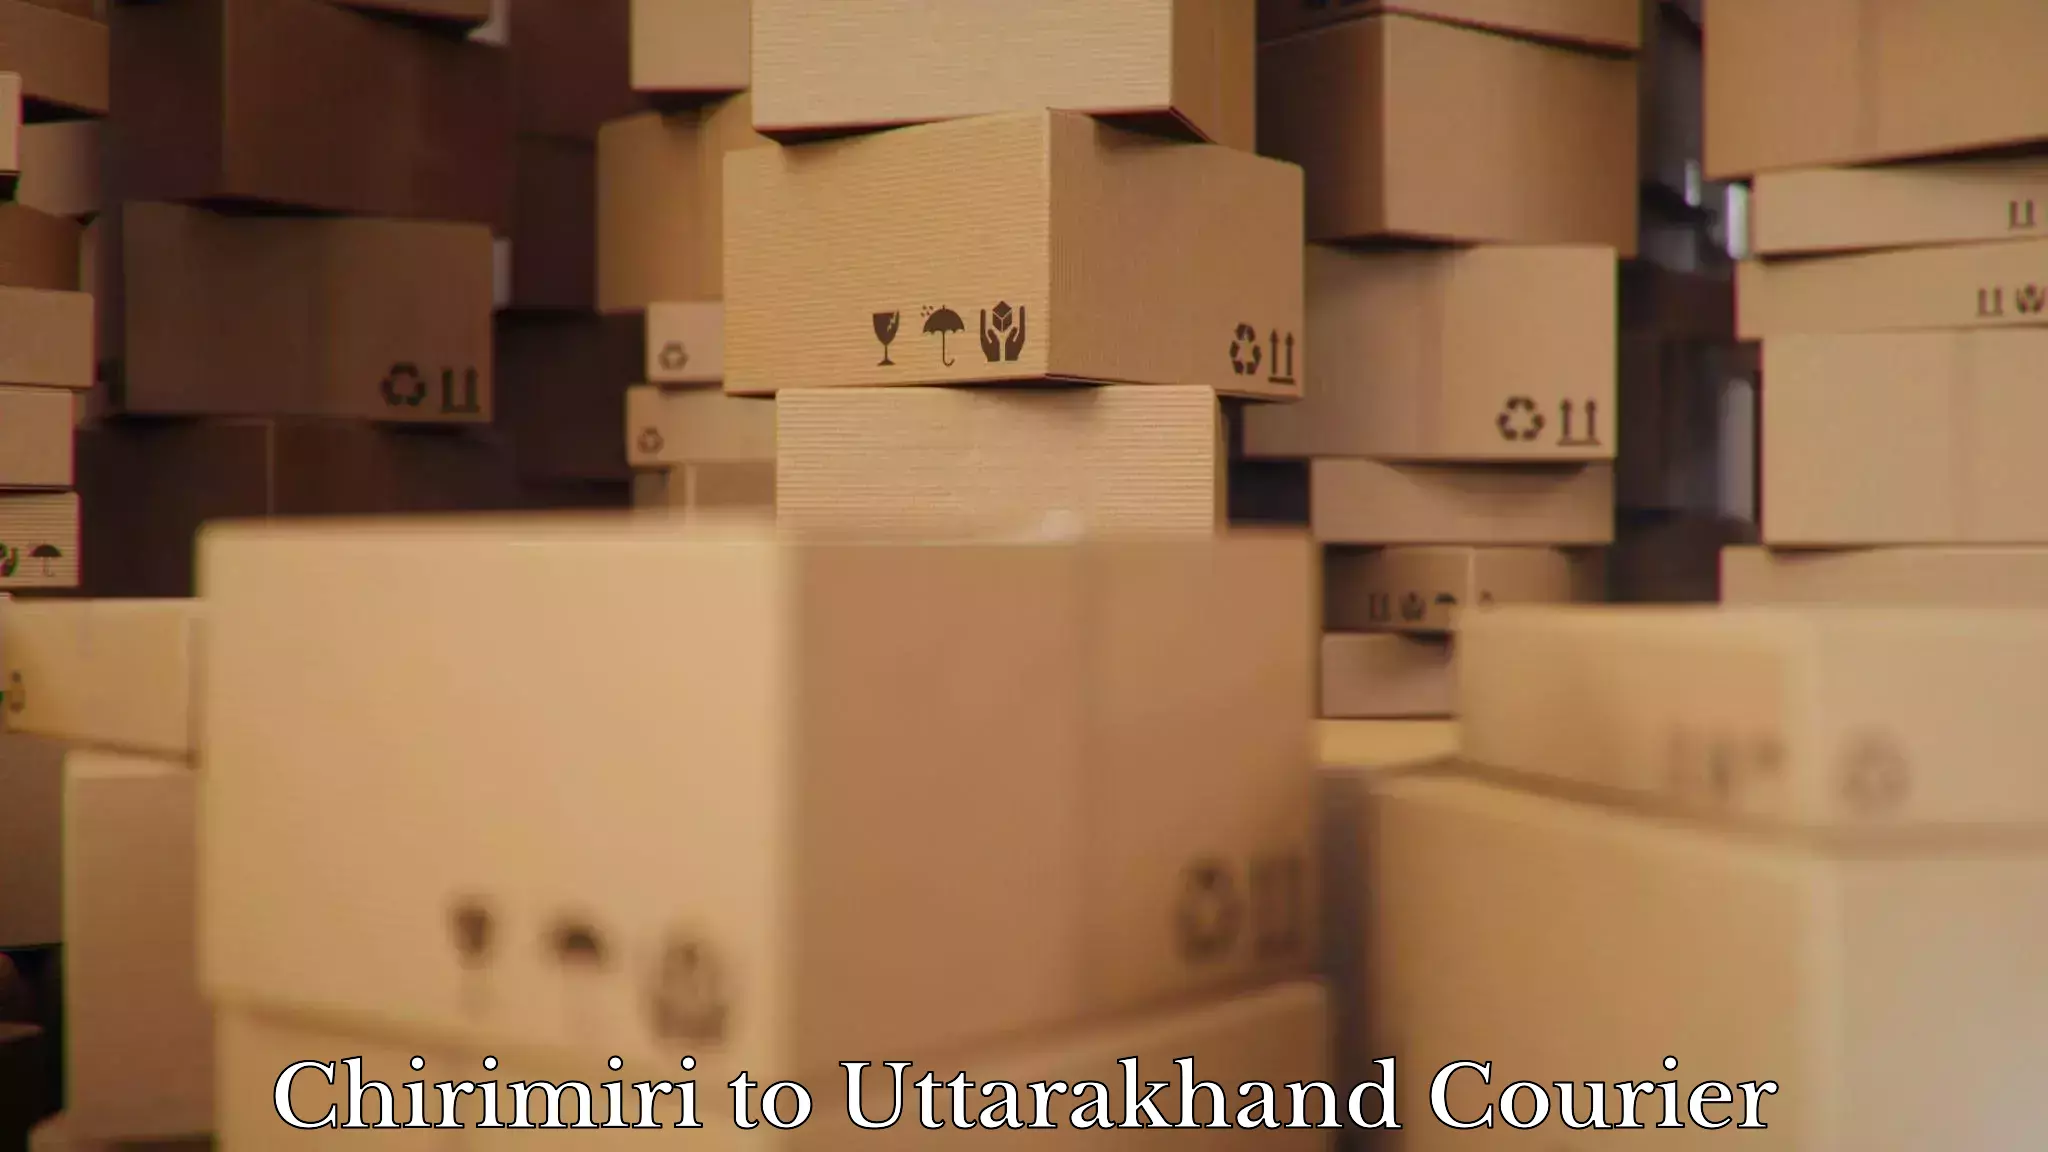 Furniture moving plans Chirimiri to Uttarakhand